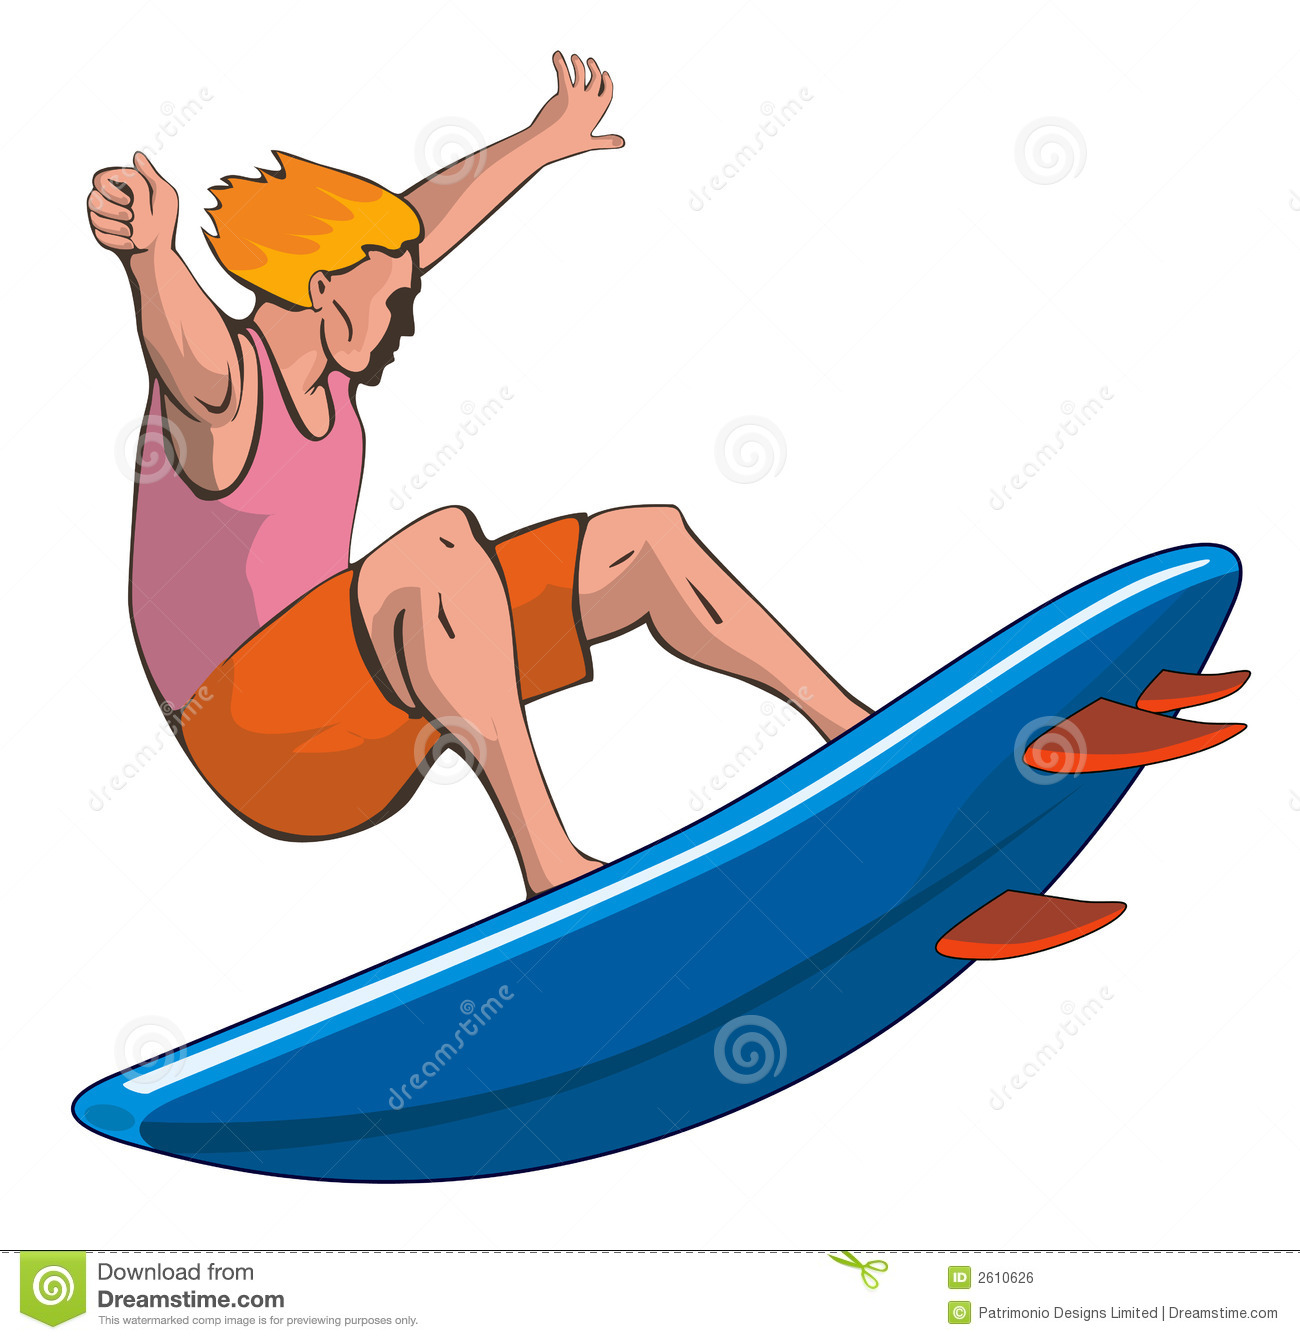 Vector art of a surfer dude